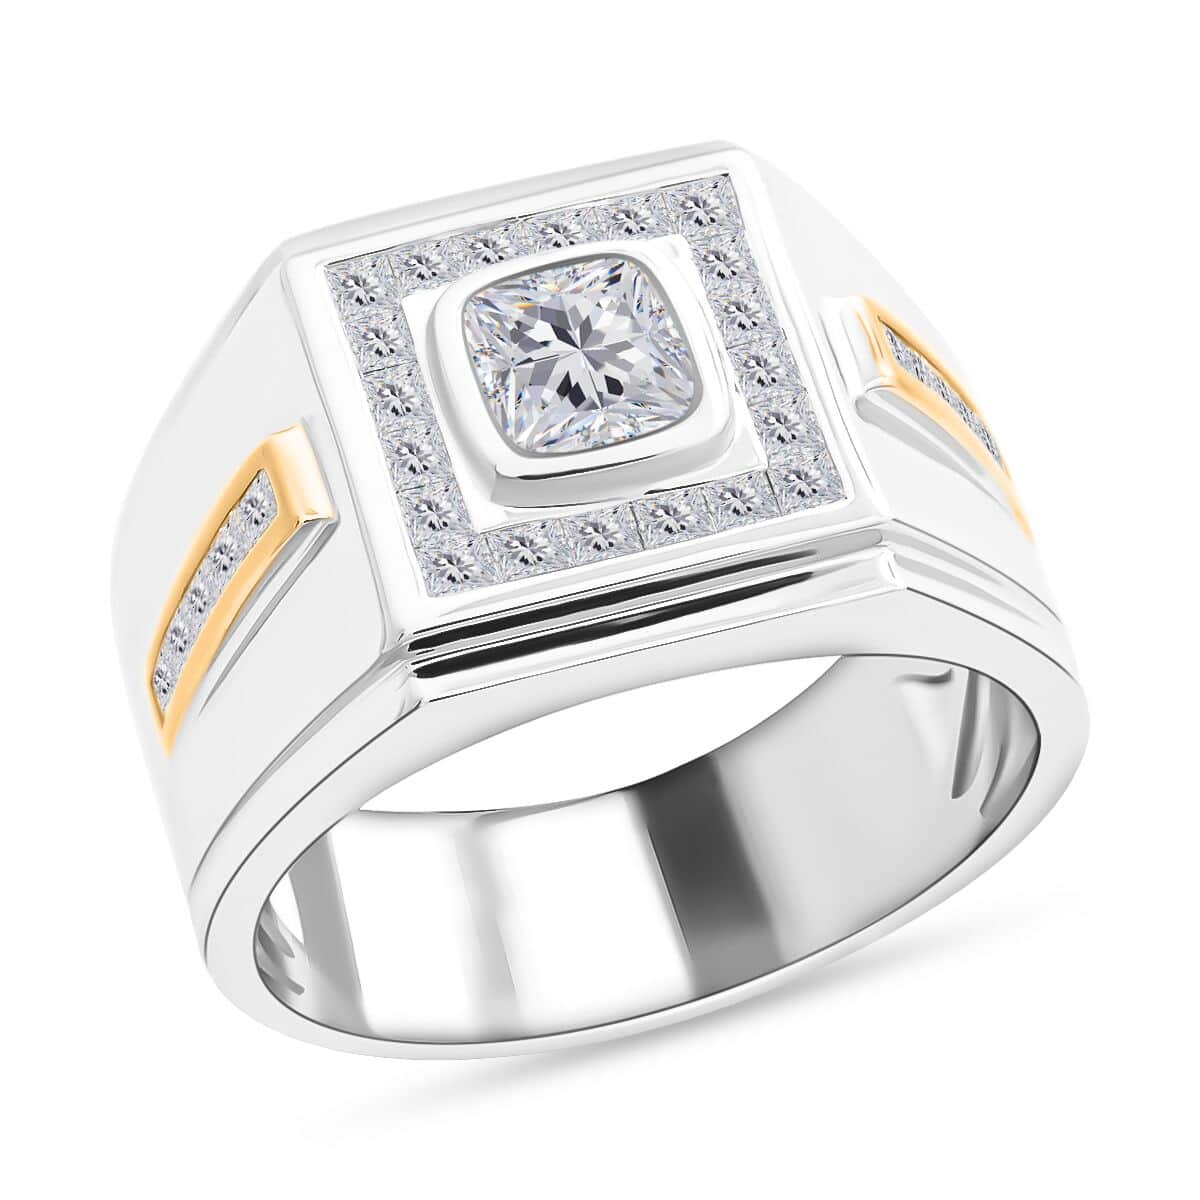 Modani 14K Yellow and White Gold I-J I2-I3 Diamond Men's Ring (Size 11.0) 9.90 Grams 2.10 ctw image number 0